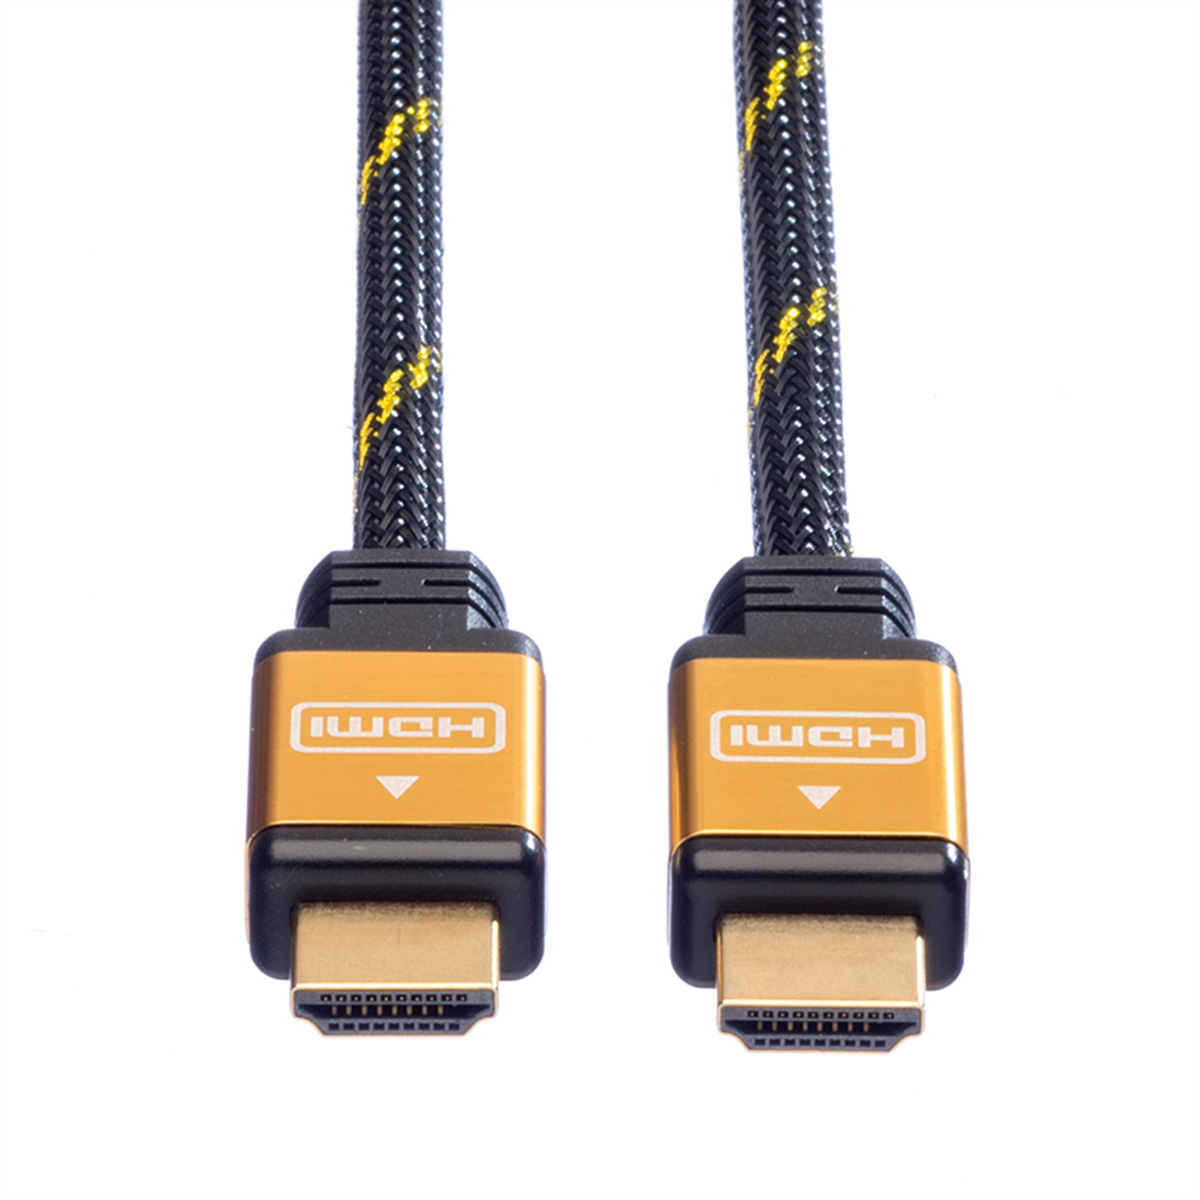 ROLINE GOLD Speed Kabel, High High HDMI Speed Kabel HDMI ST-ST